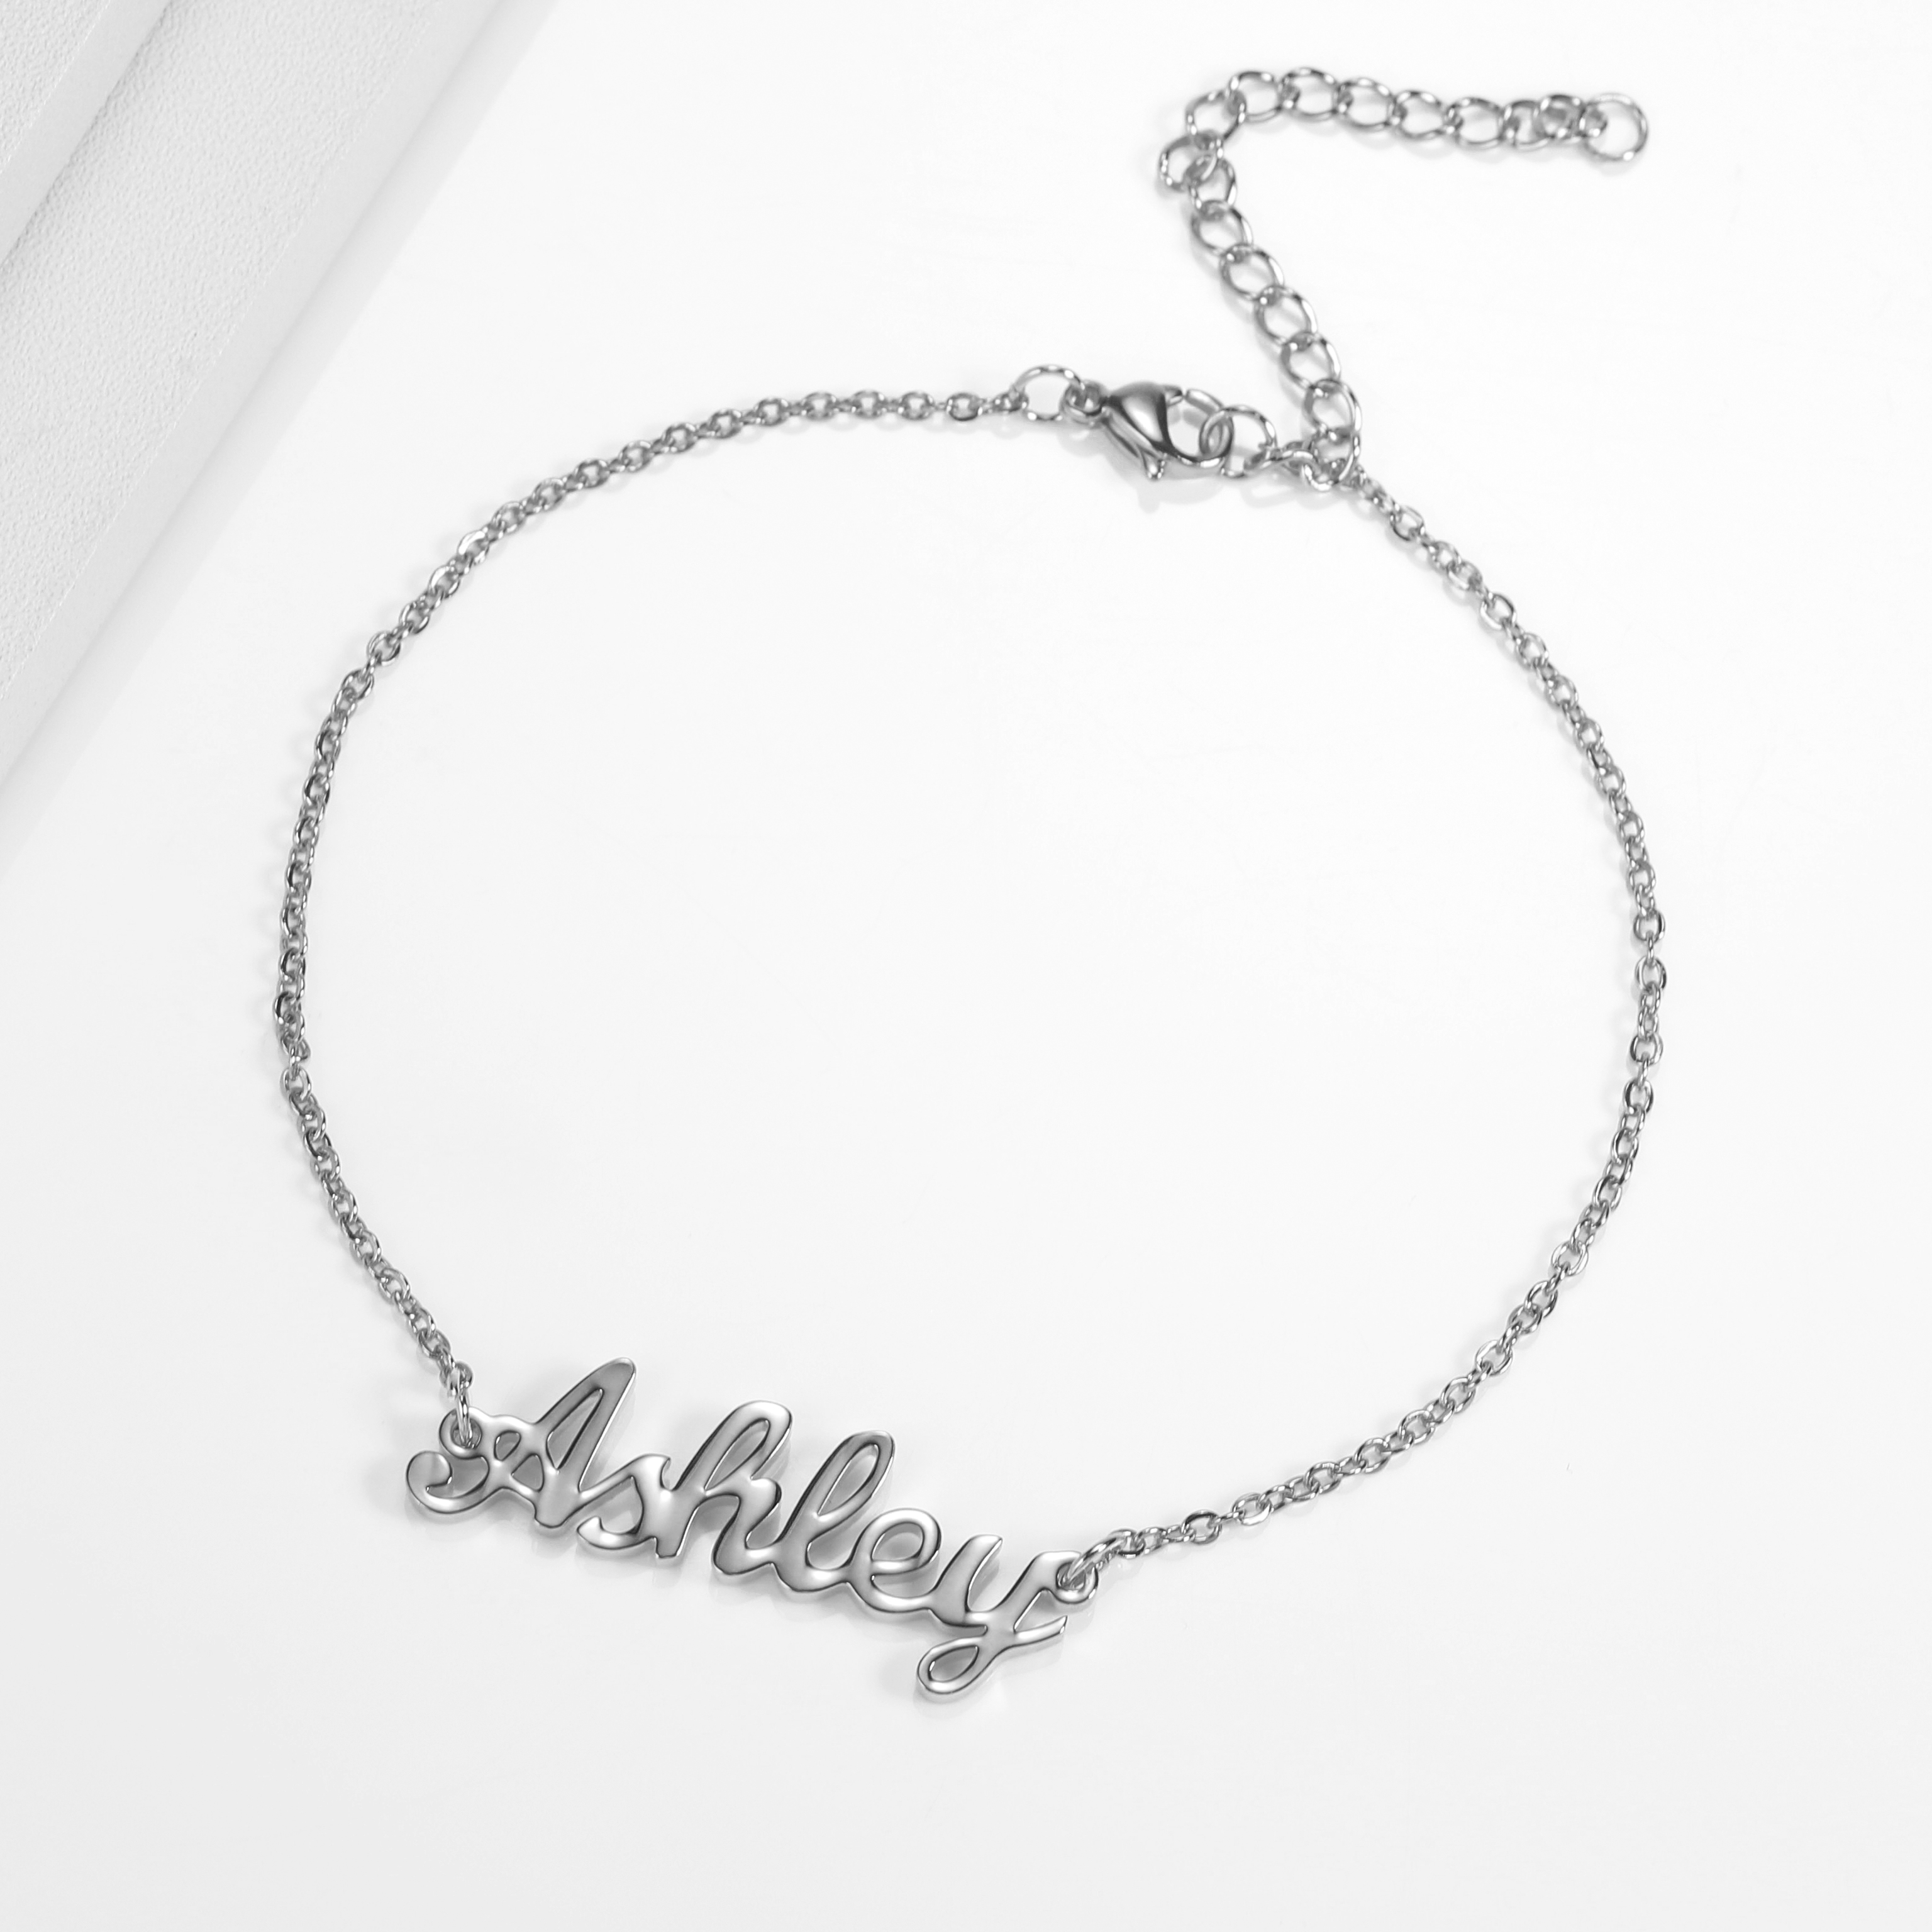 Zciti Personalized Name Anklet Bracelet- Initial Anklet - Letter Anklet - Custom Name Anklet - Dainty Classic Jewelry